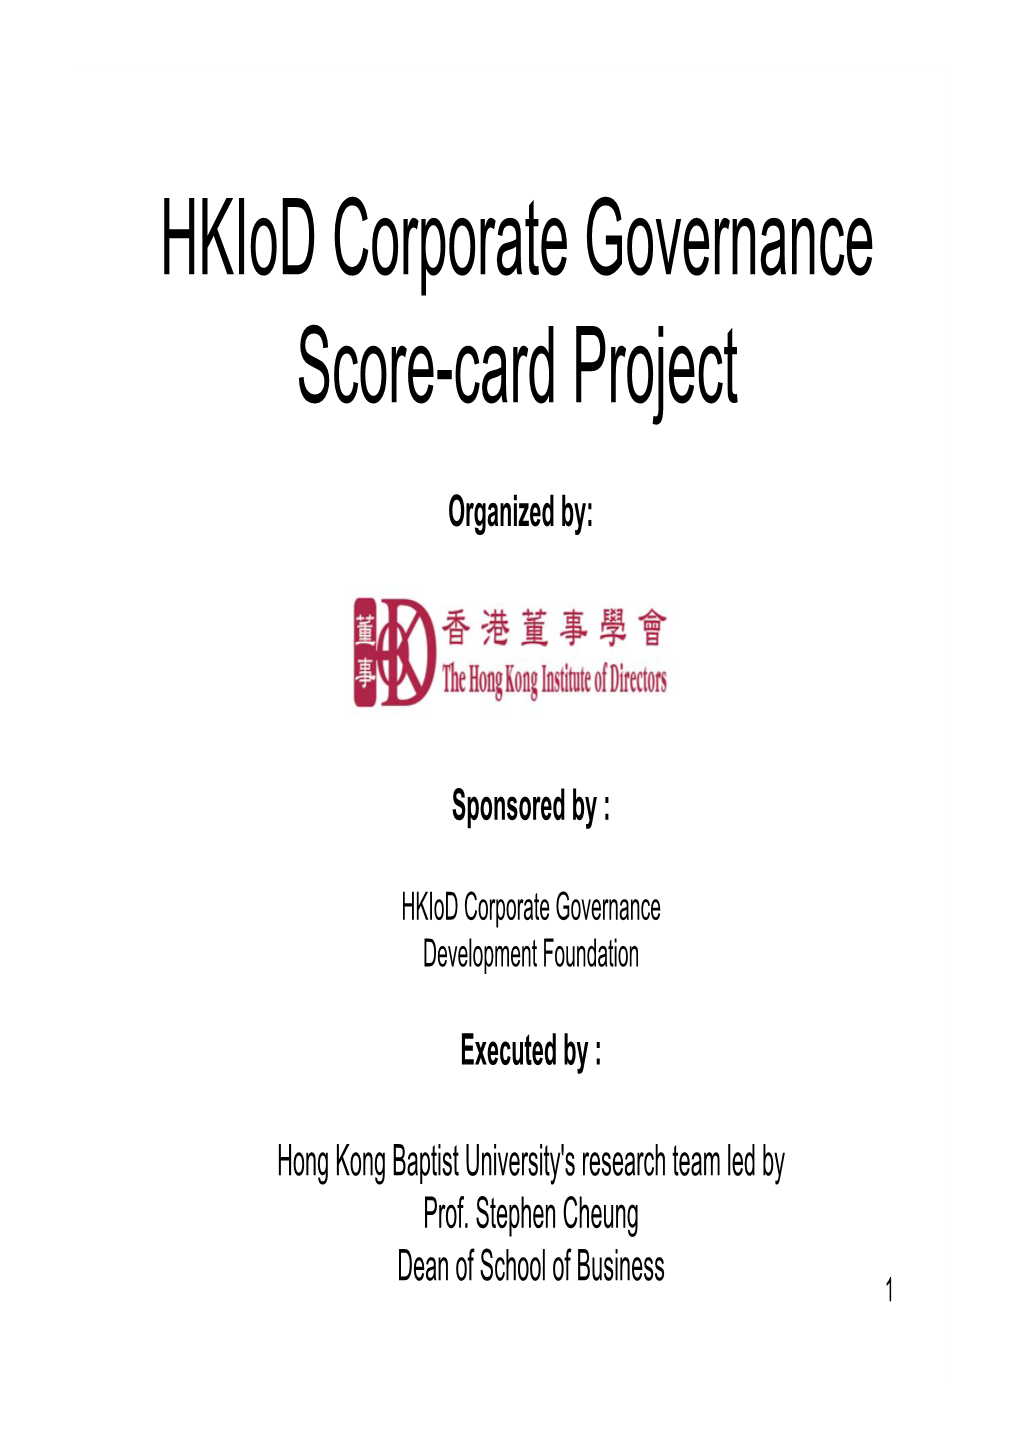 Hkiod Corporate Governance Score-Card Project